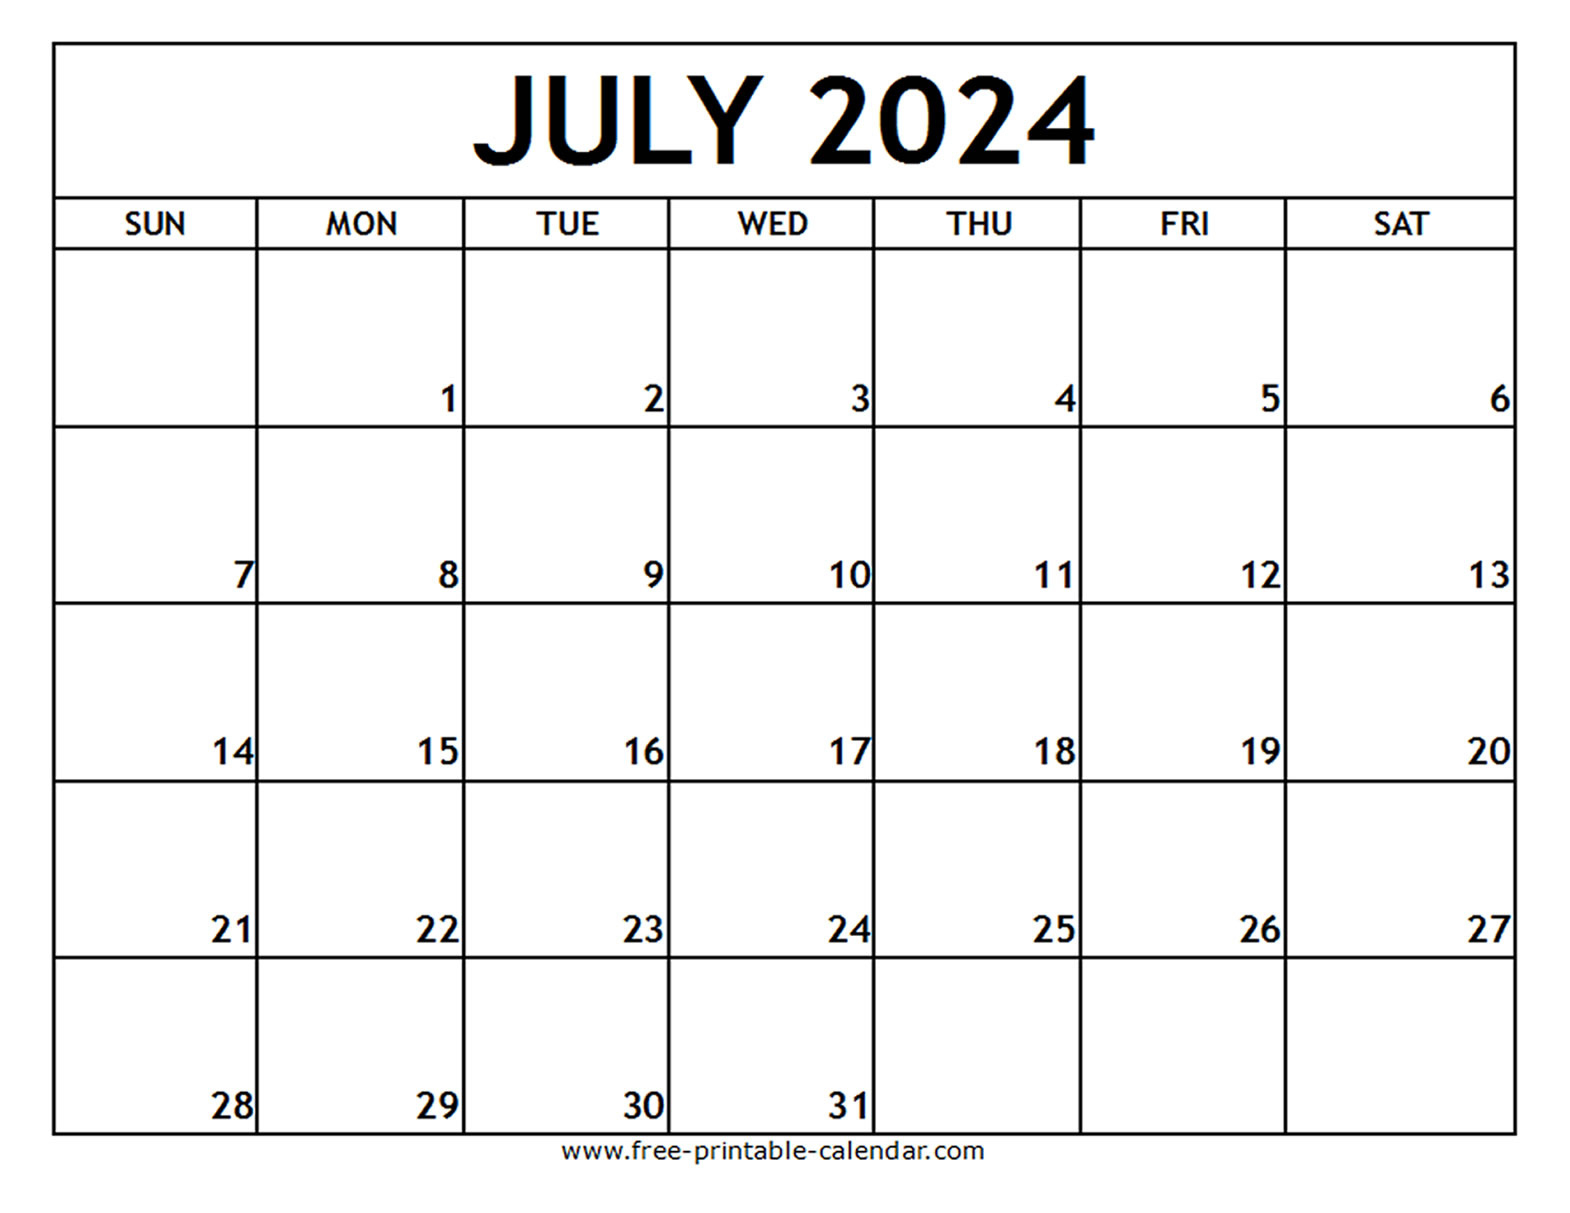 July 2024 Printable Calendar - Free-Printable-Calendar for Month of July Printable Calendar 2024